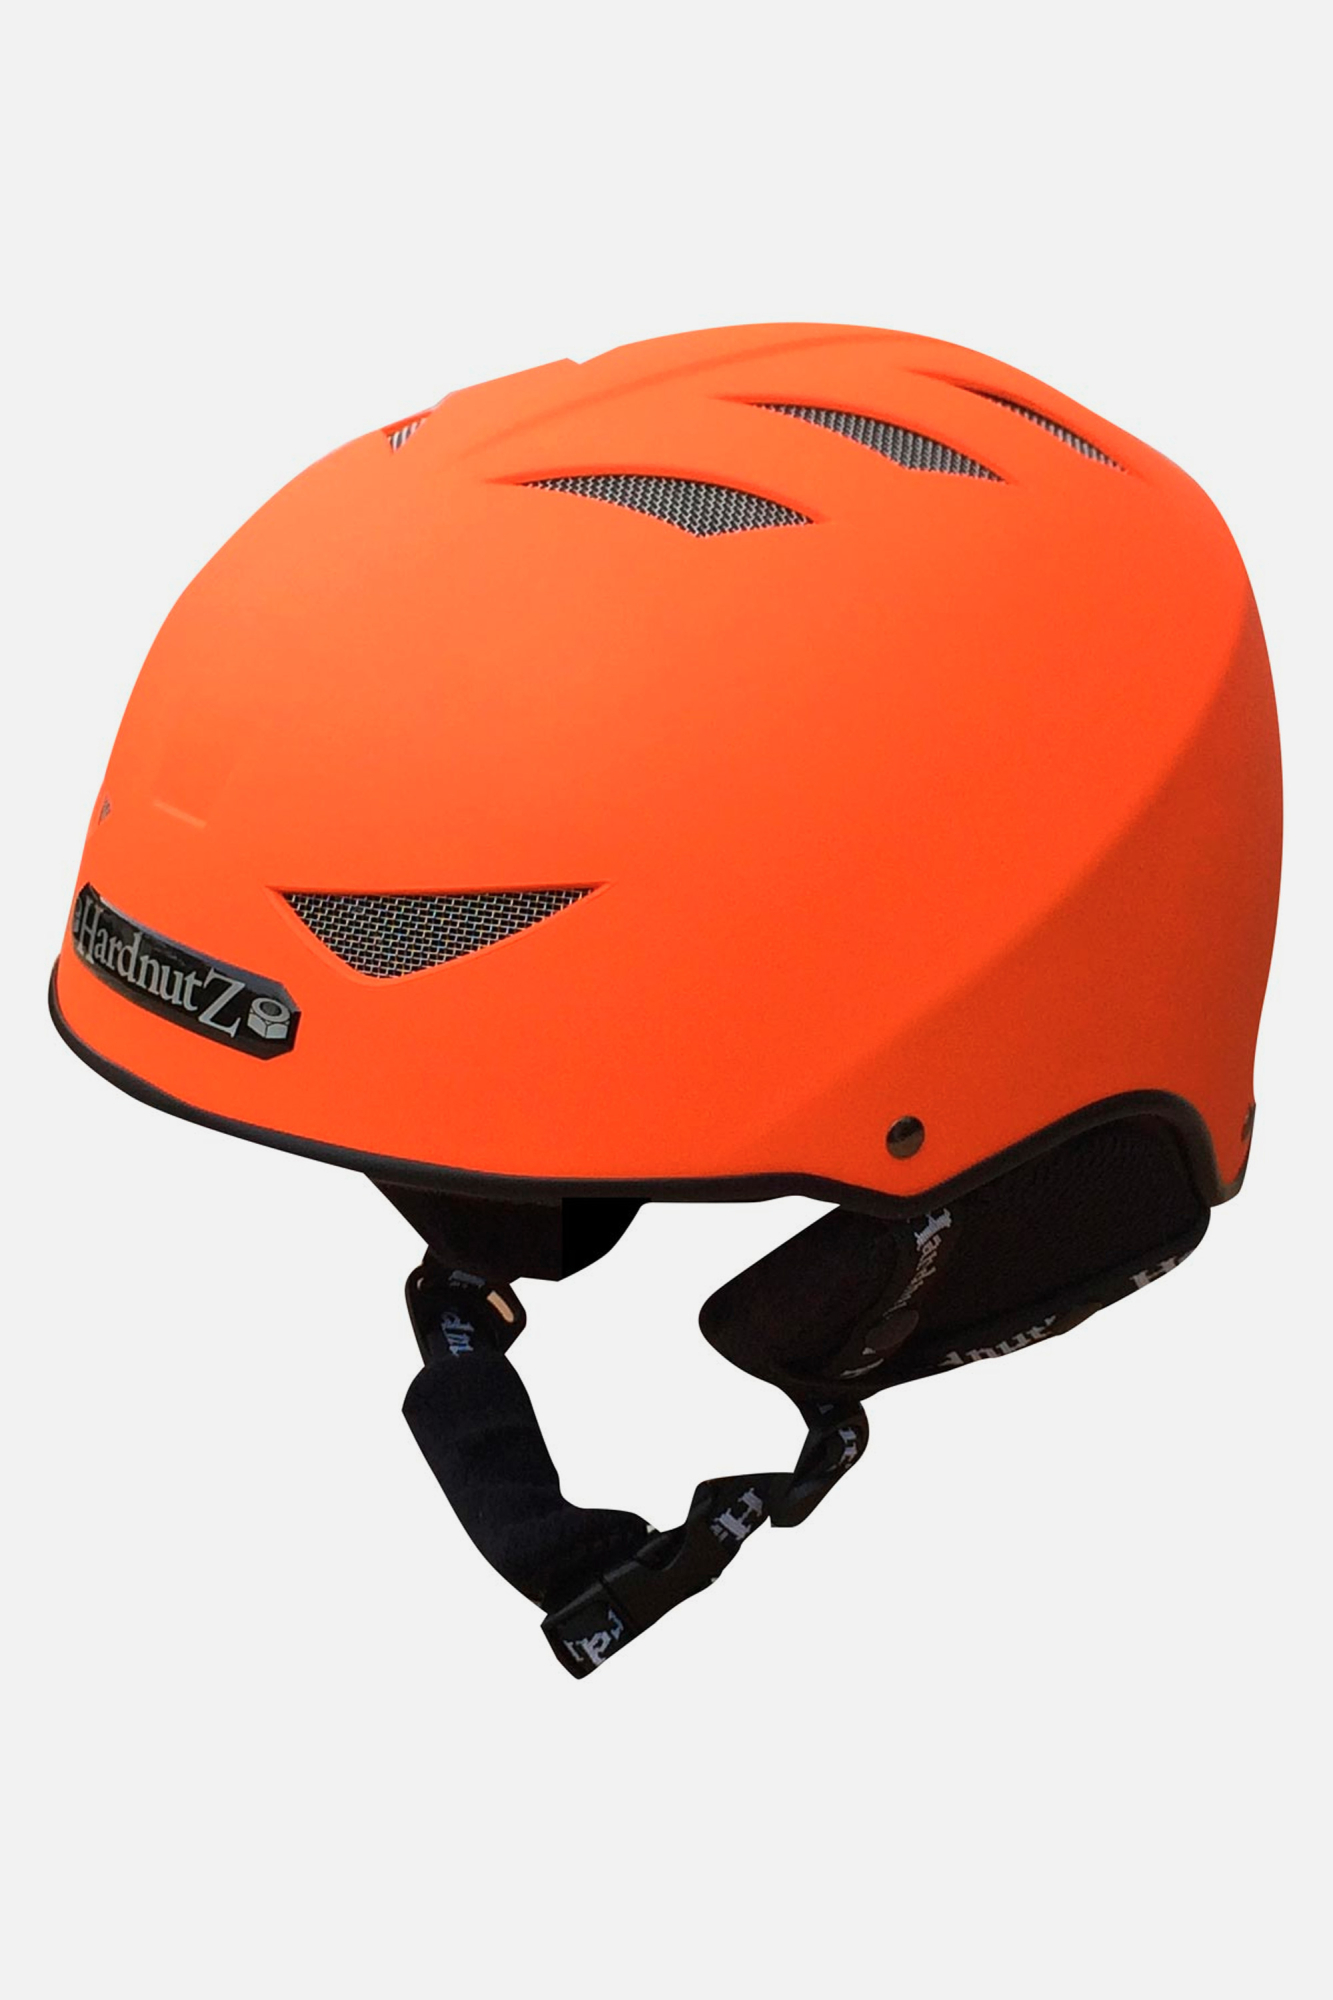 Hardnutz Rubber Helmet Orange - Size: Medium